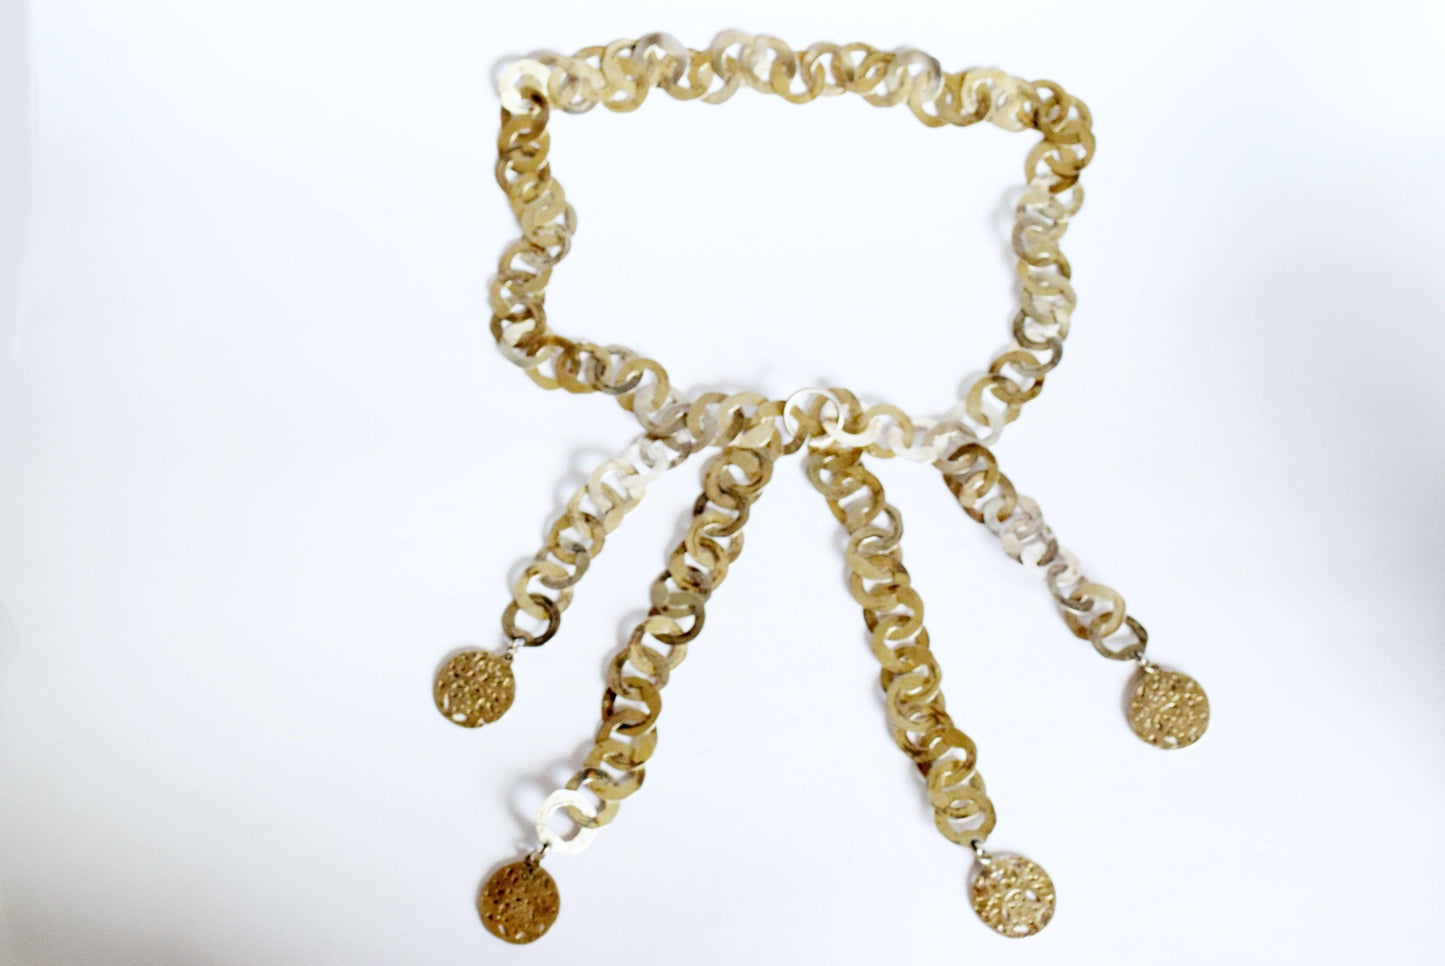 ON HOLD - Vintage Silver Tunisian Rihana Chain Necklace with Berber Pendants - Anteeka